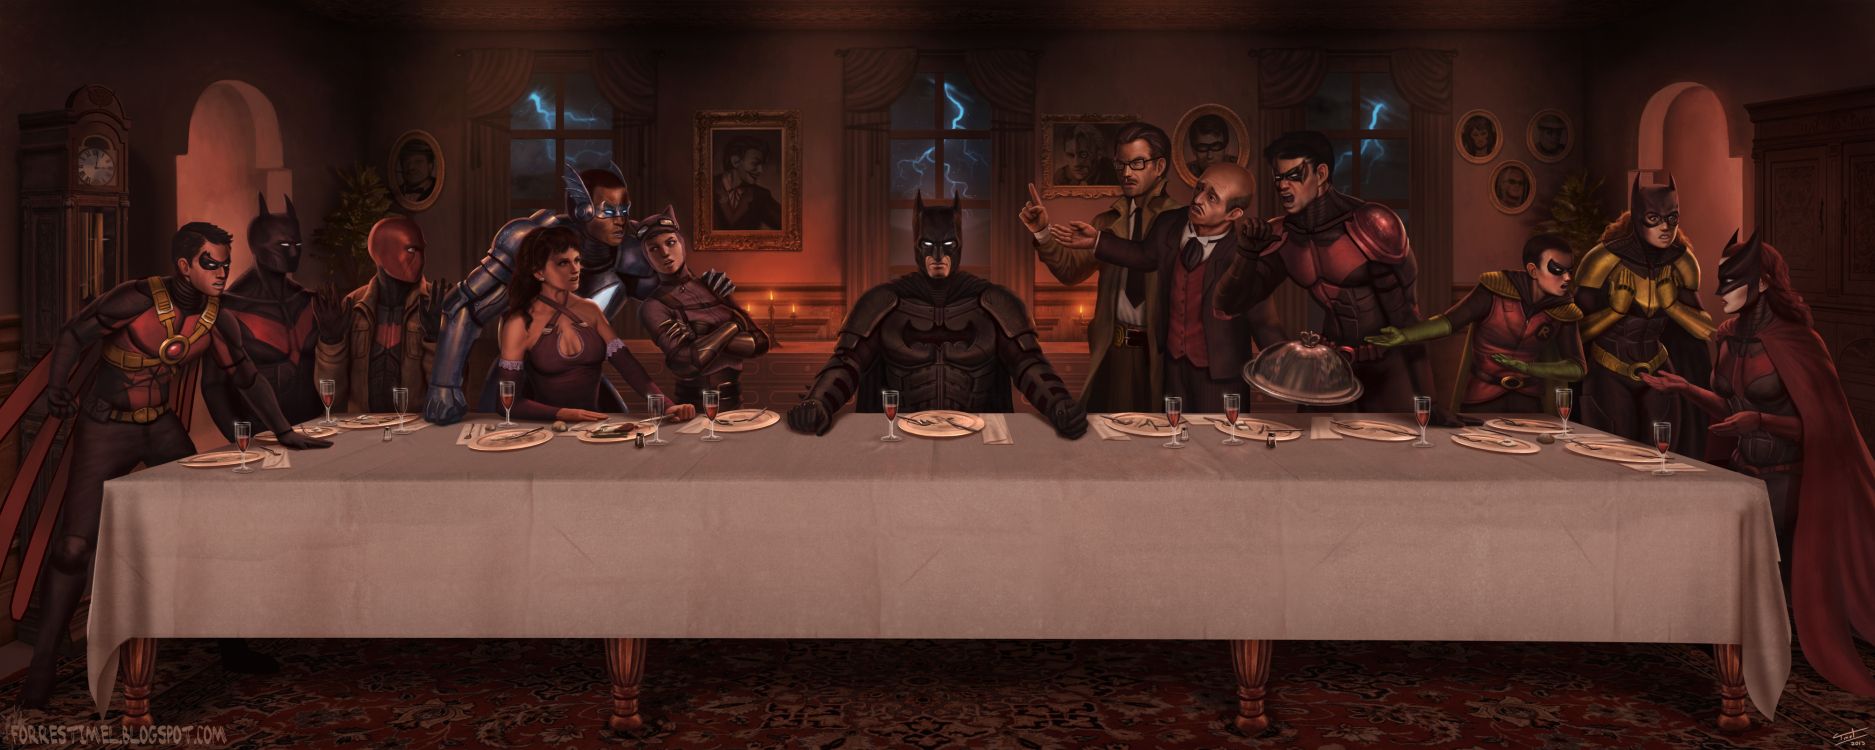 Dernier Souper de Batman, Batman, Cène, Robin, Chaperon Rouge. Wallpaper in 4000x1600 Resolution